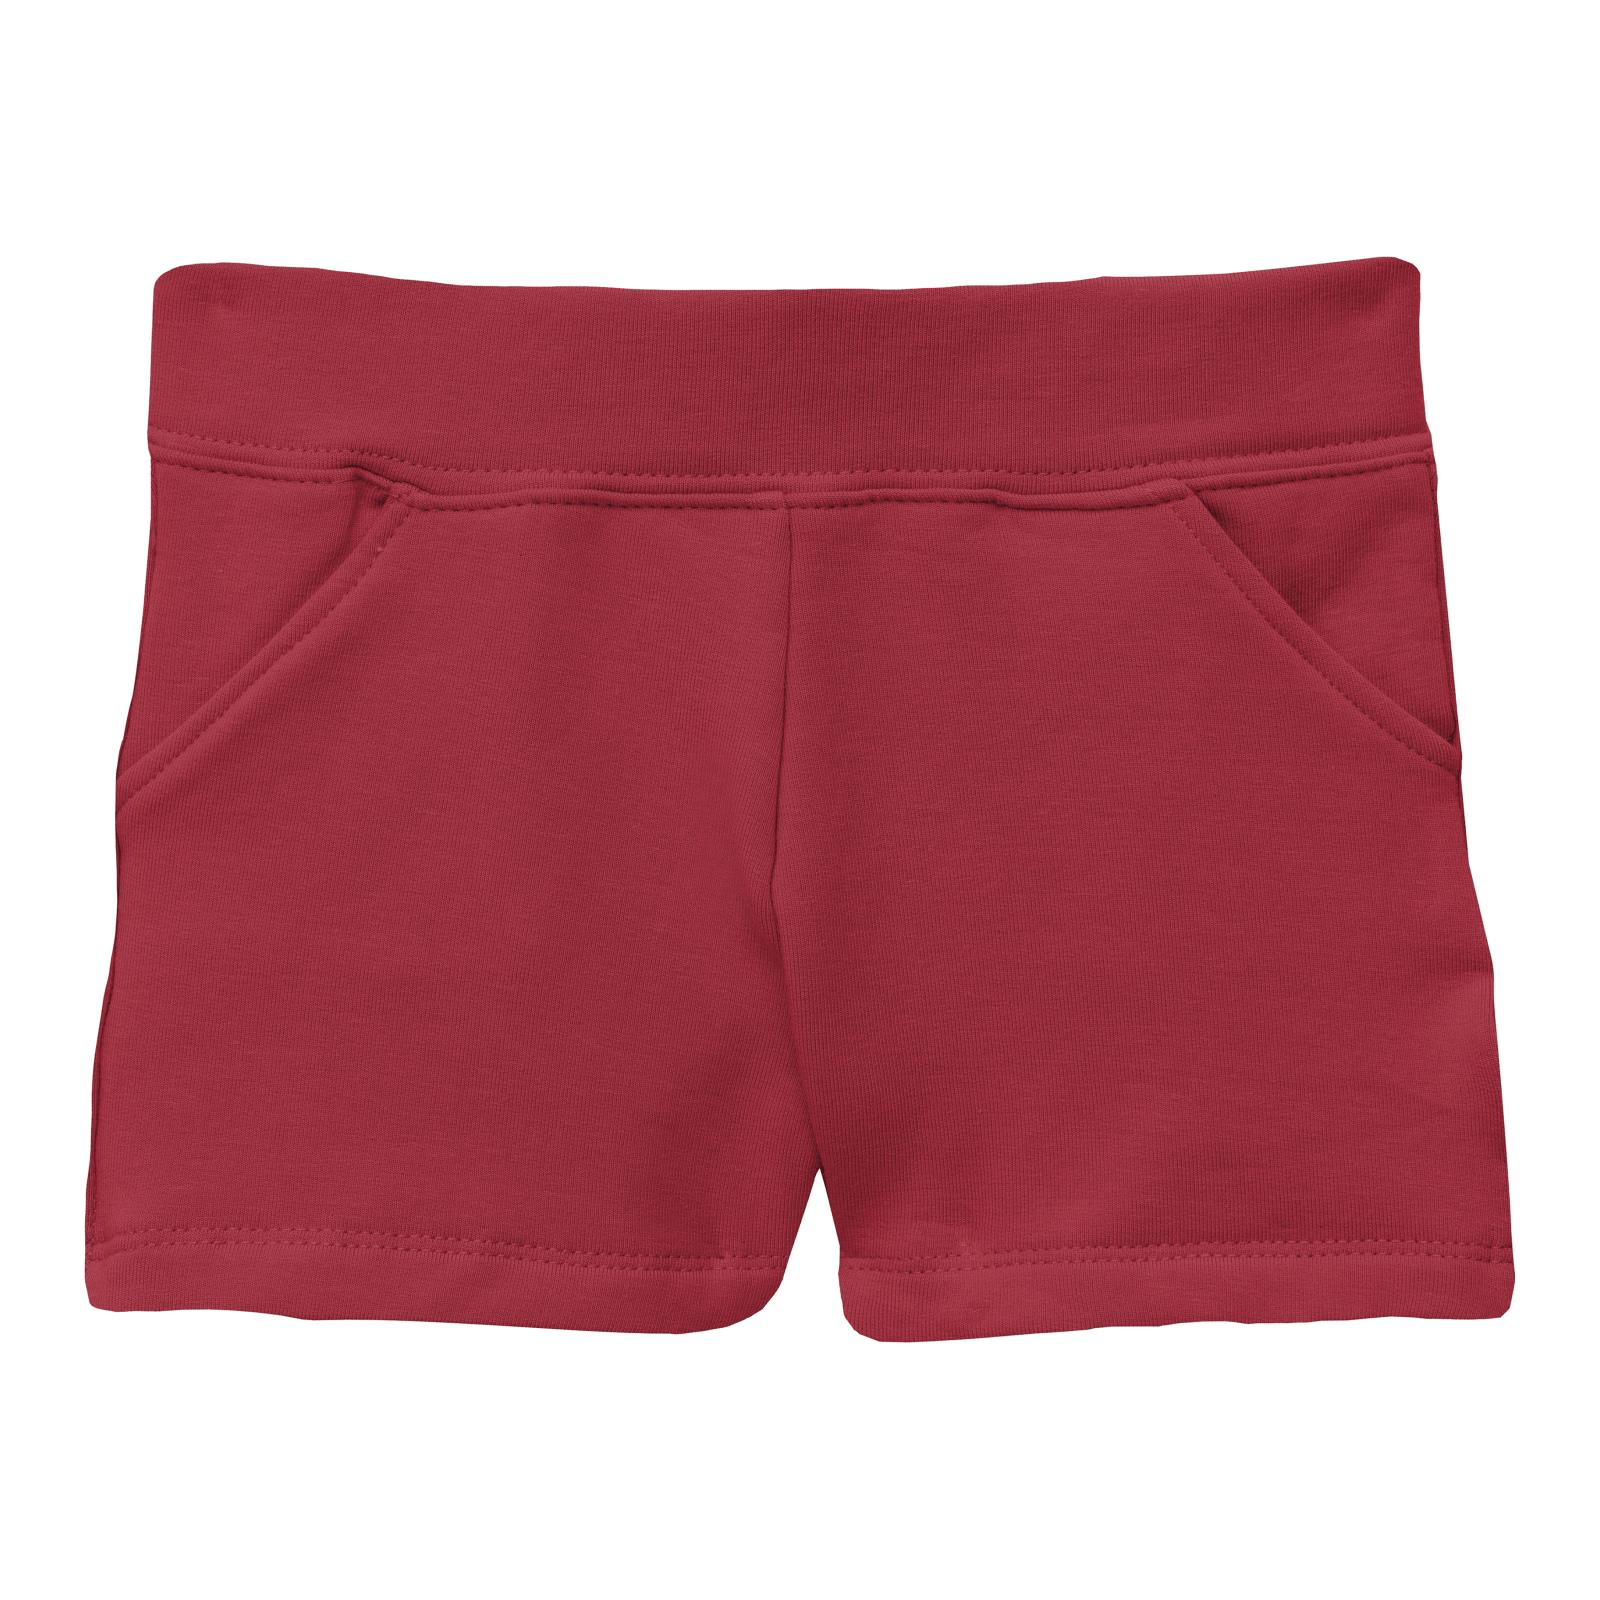 Kickee Pants - Fleece Summer Shorts - Arktana - Baby Clothing